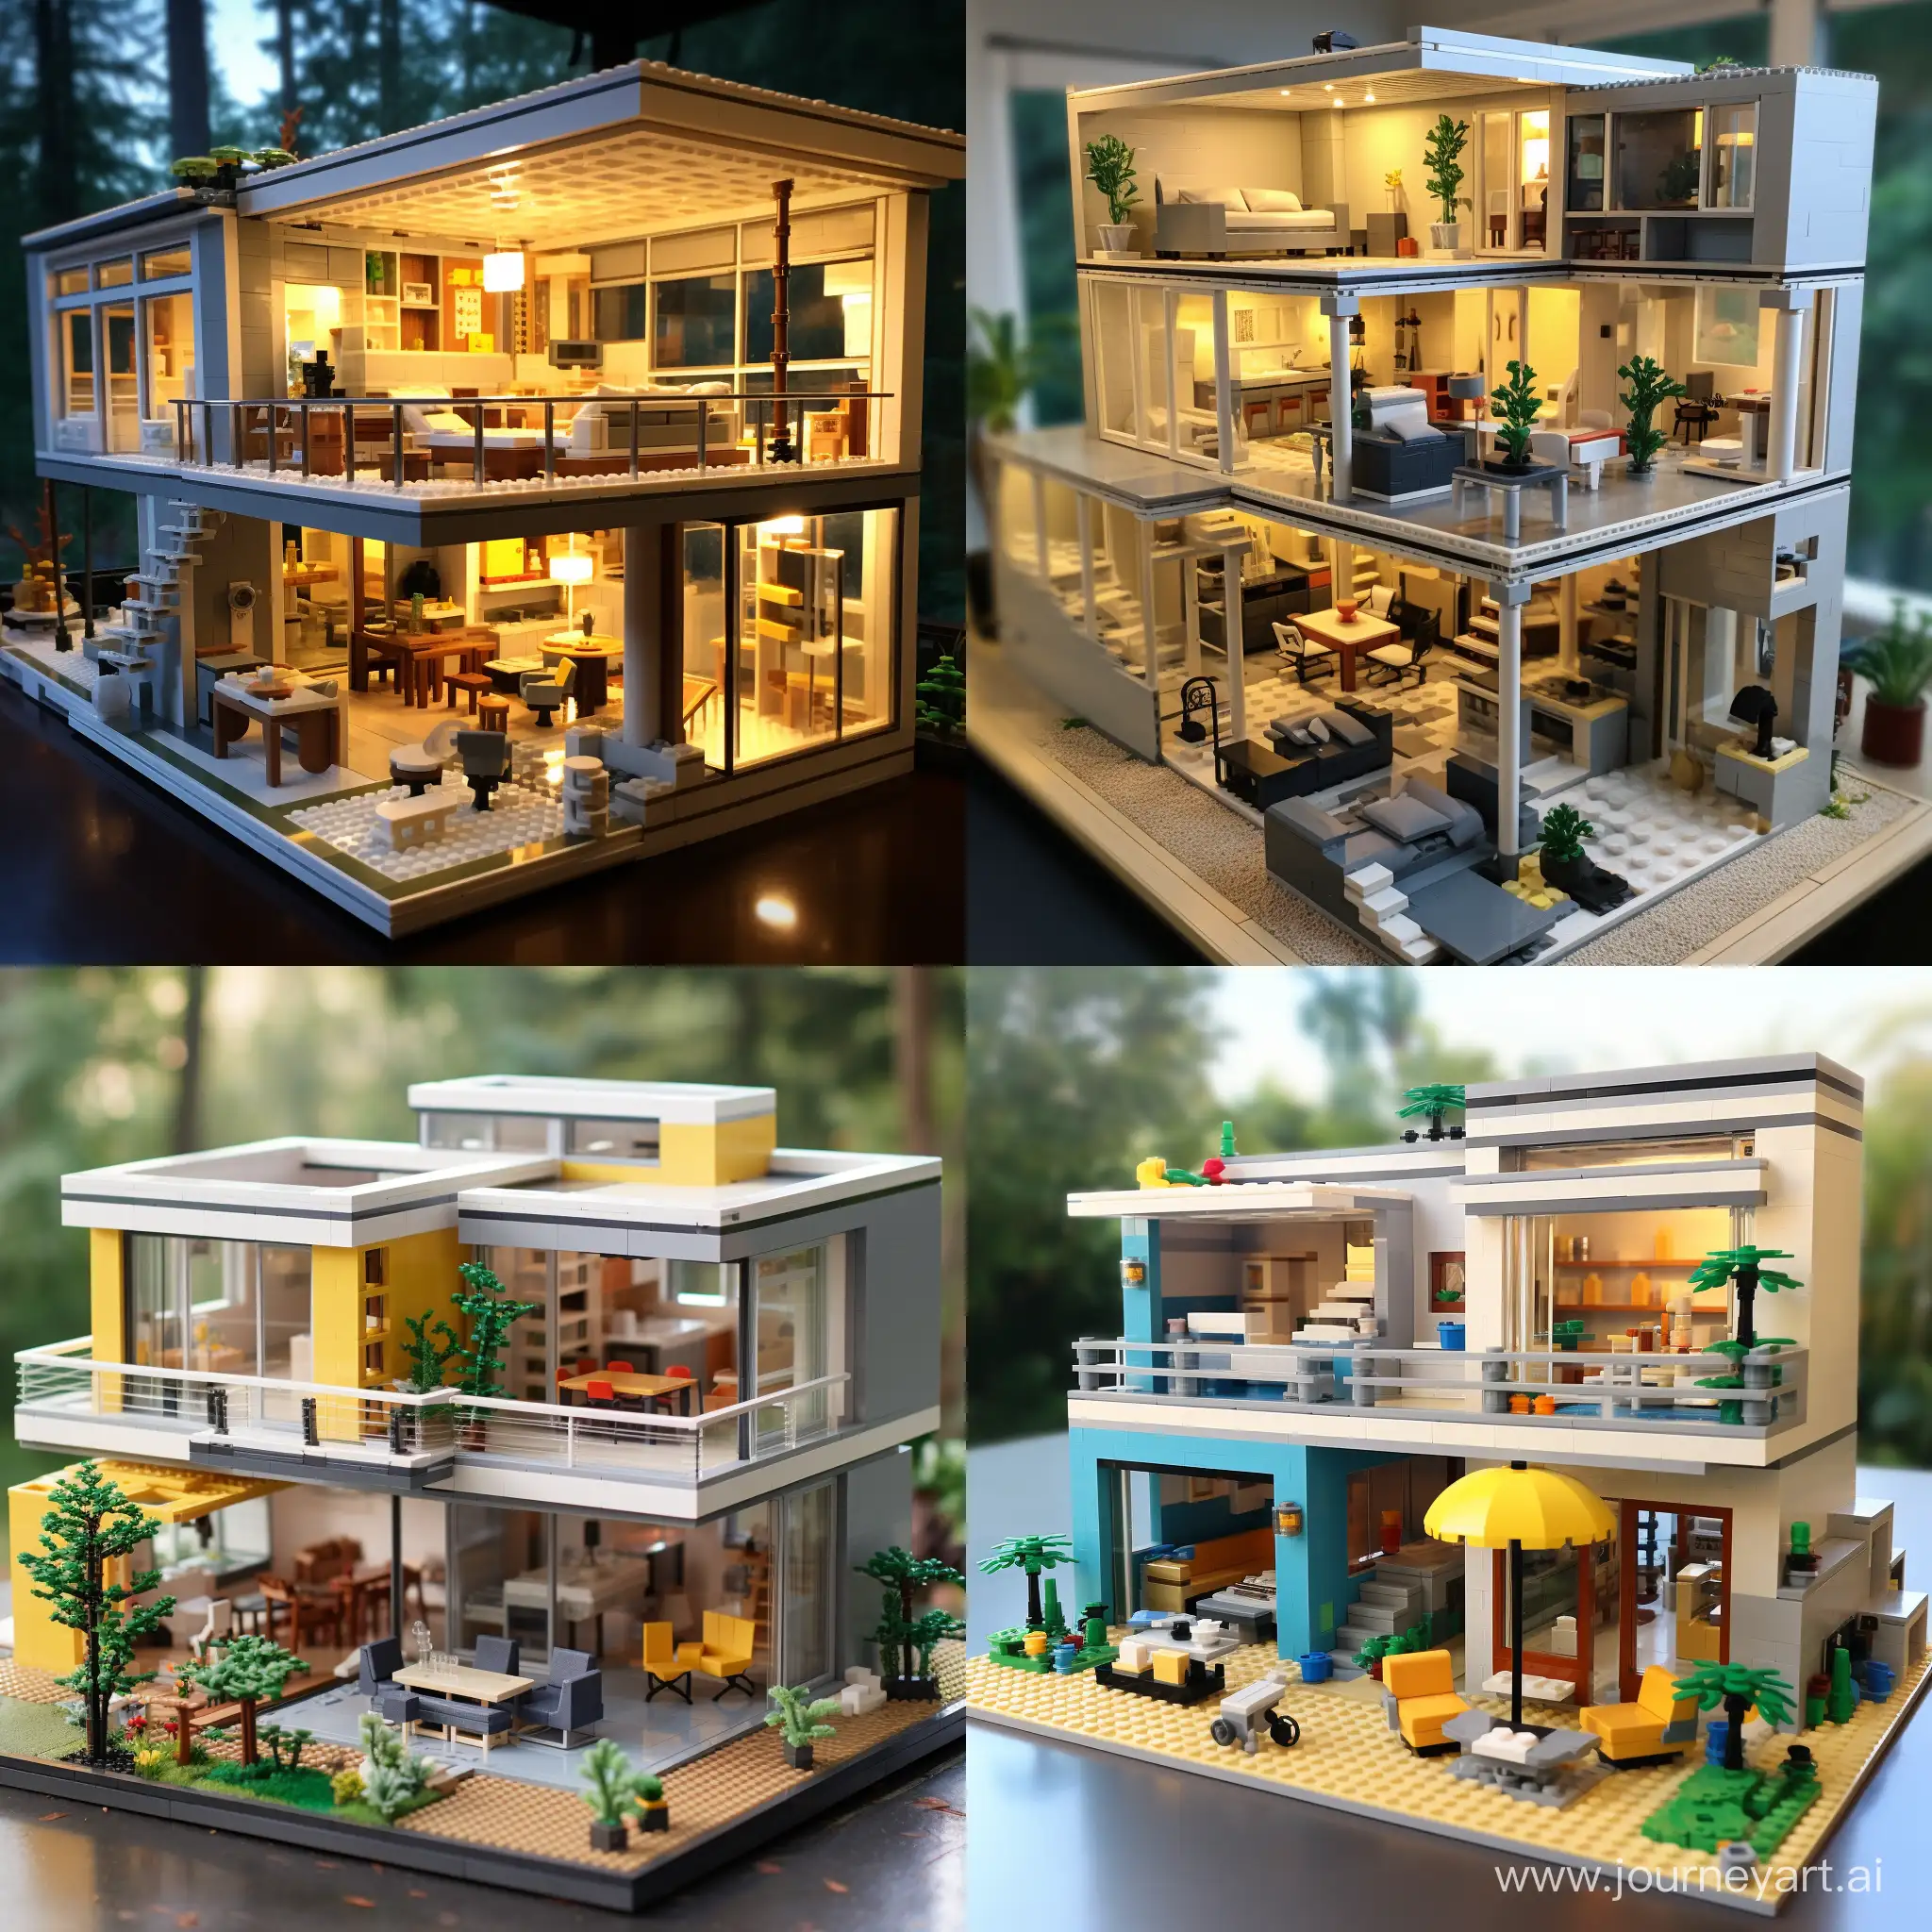 Real-Life-Lego-Bricks-Home-Building-FullScale-Construction-with-37983-Bricks